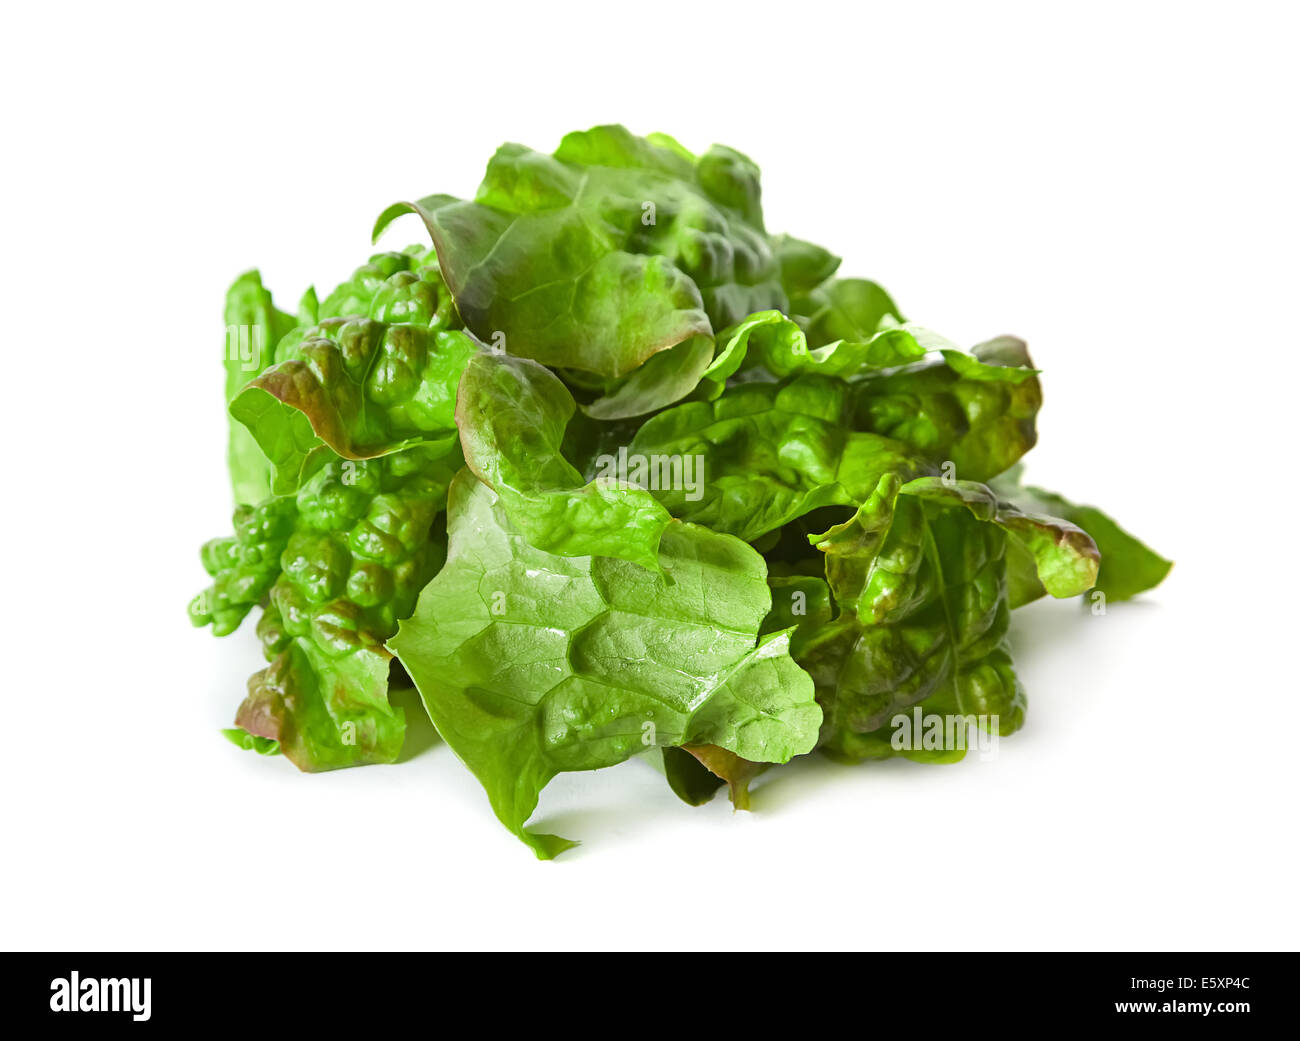 Zerlumpten lockige Salat Salat Closeup isoliert auf weiss Stockfoto